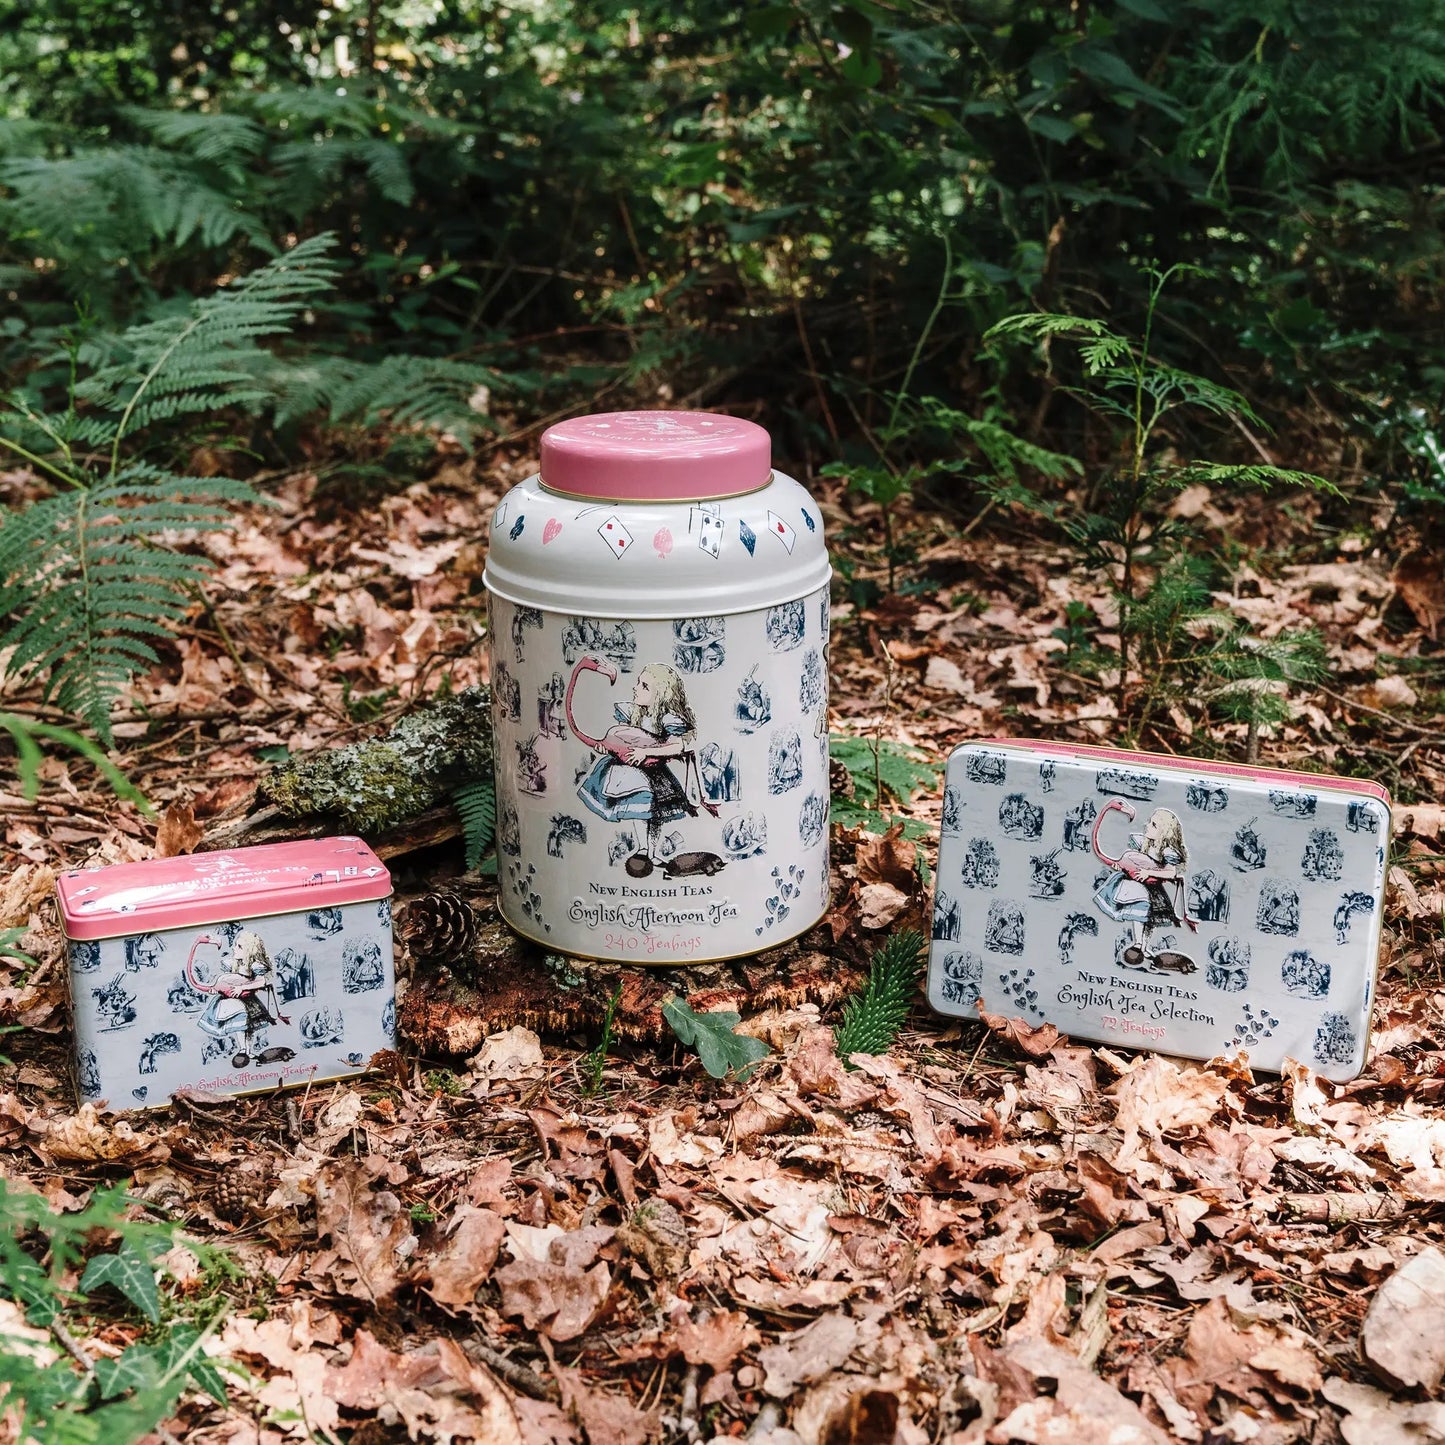 Alice in Wonderland Pink Flamingo Tea Gift Bundle Gift Sets New English Teas 